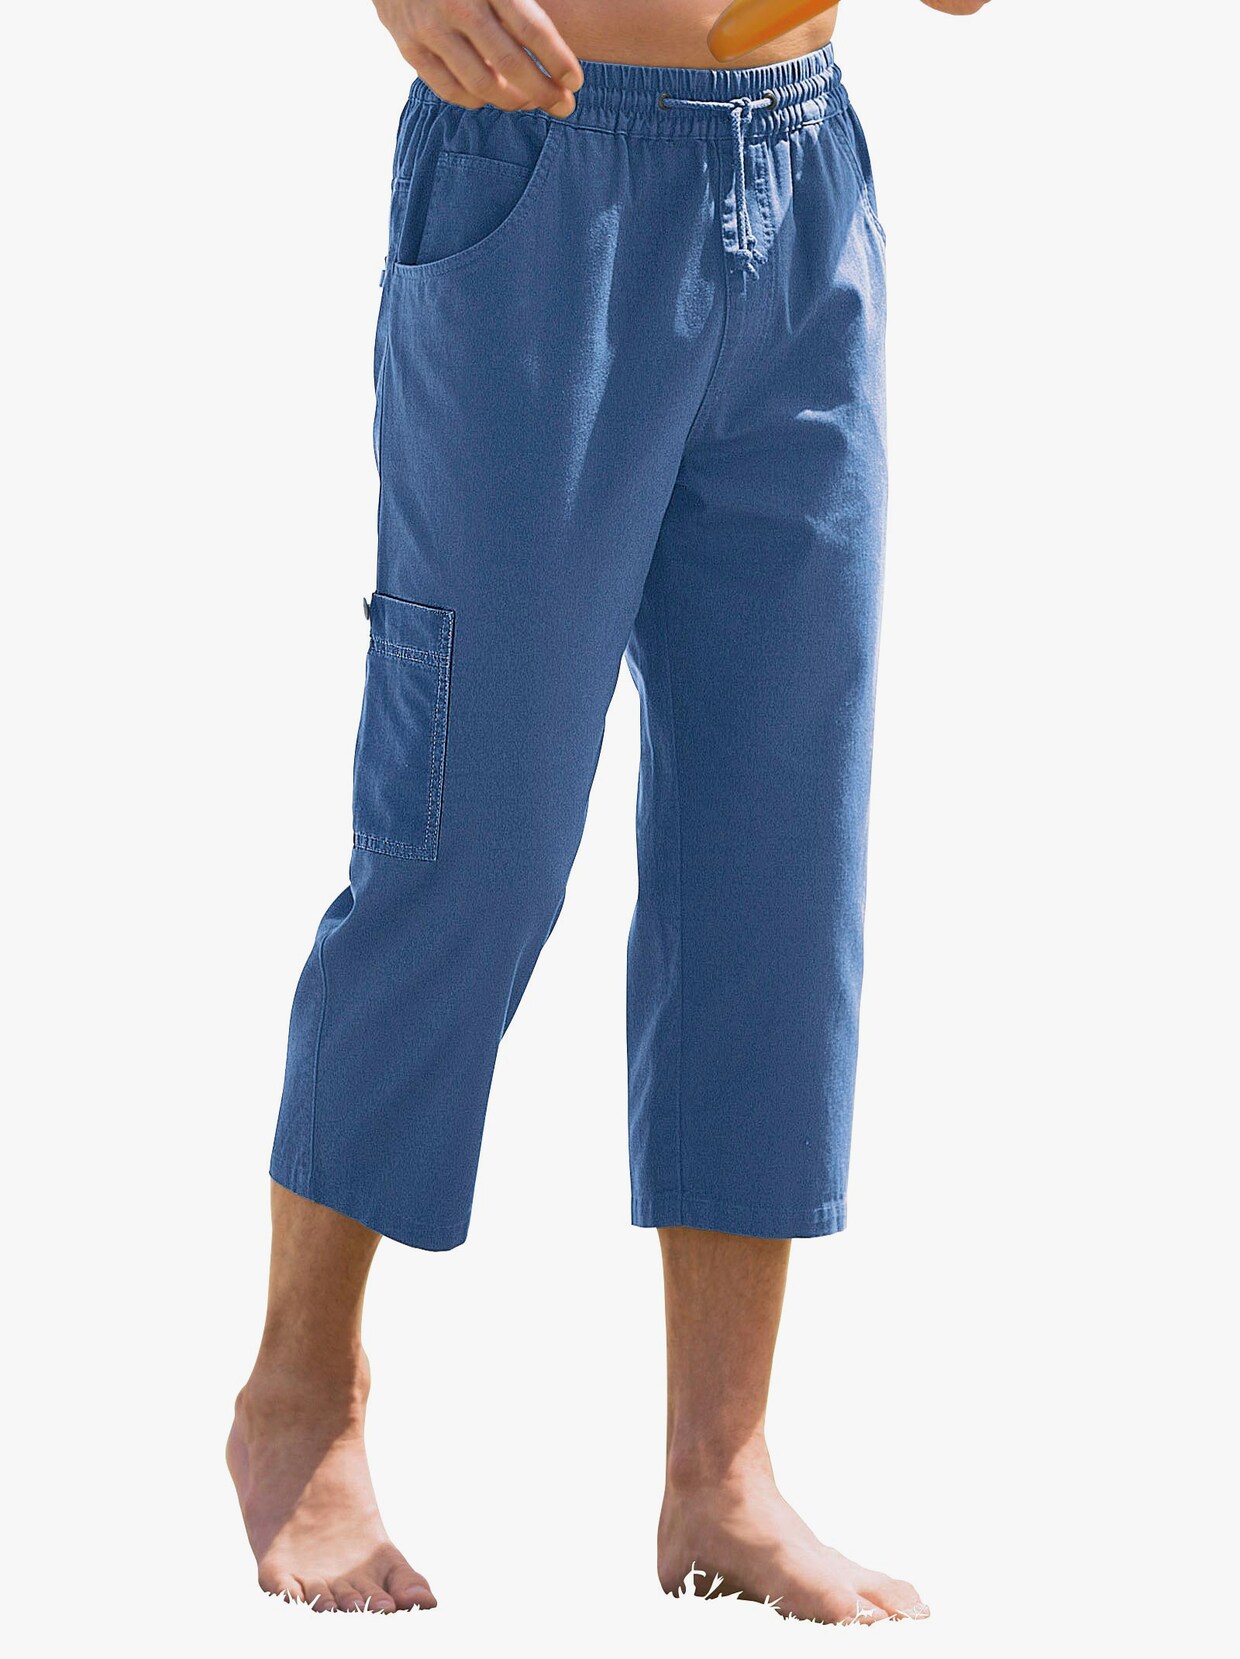 Nohavice na gumu - vyšúchaná modrá